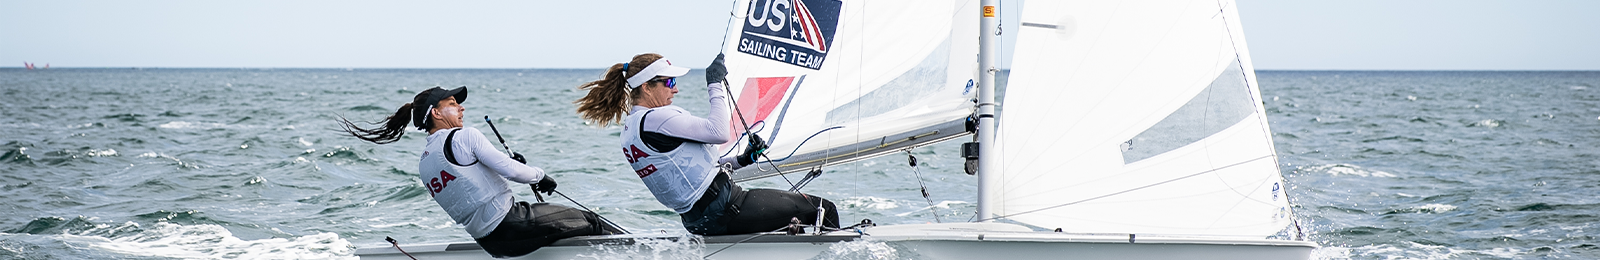 Marinalife Proudly Sponsors U.S. Olympic Sailing Team